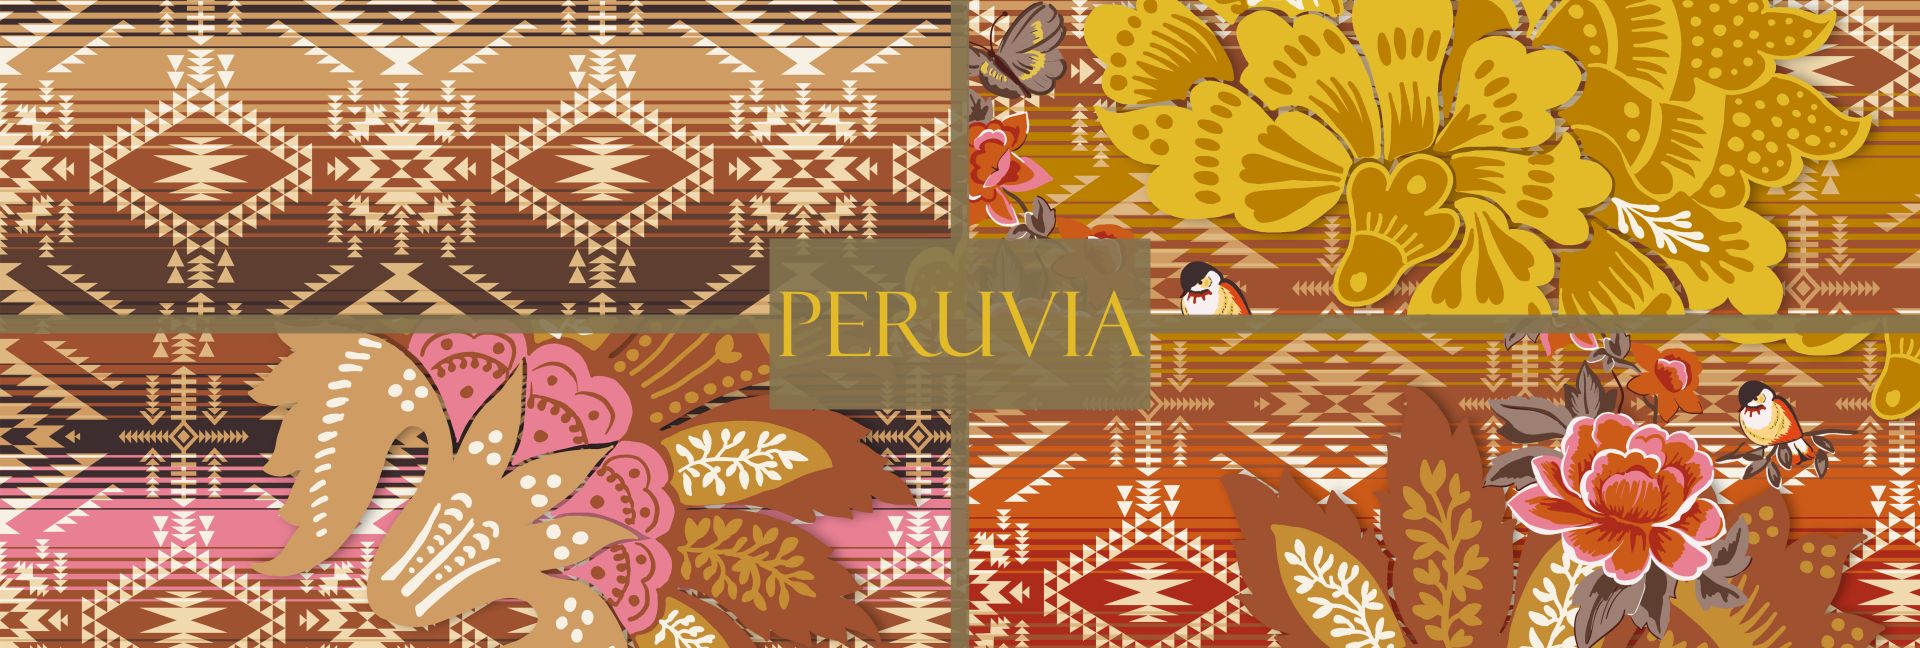 banner peruvia_1920x1920